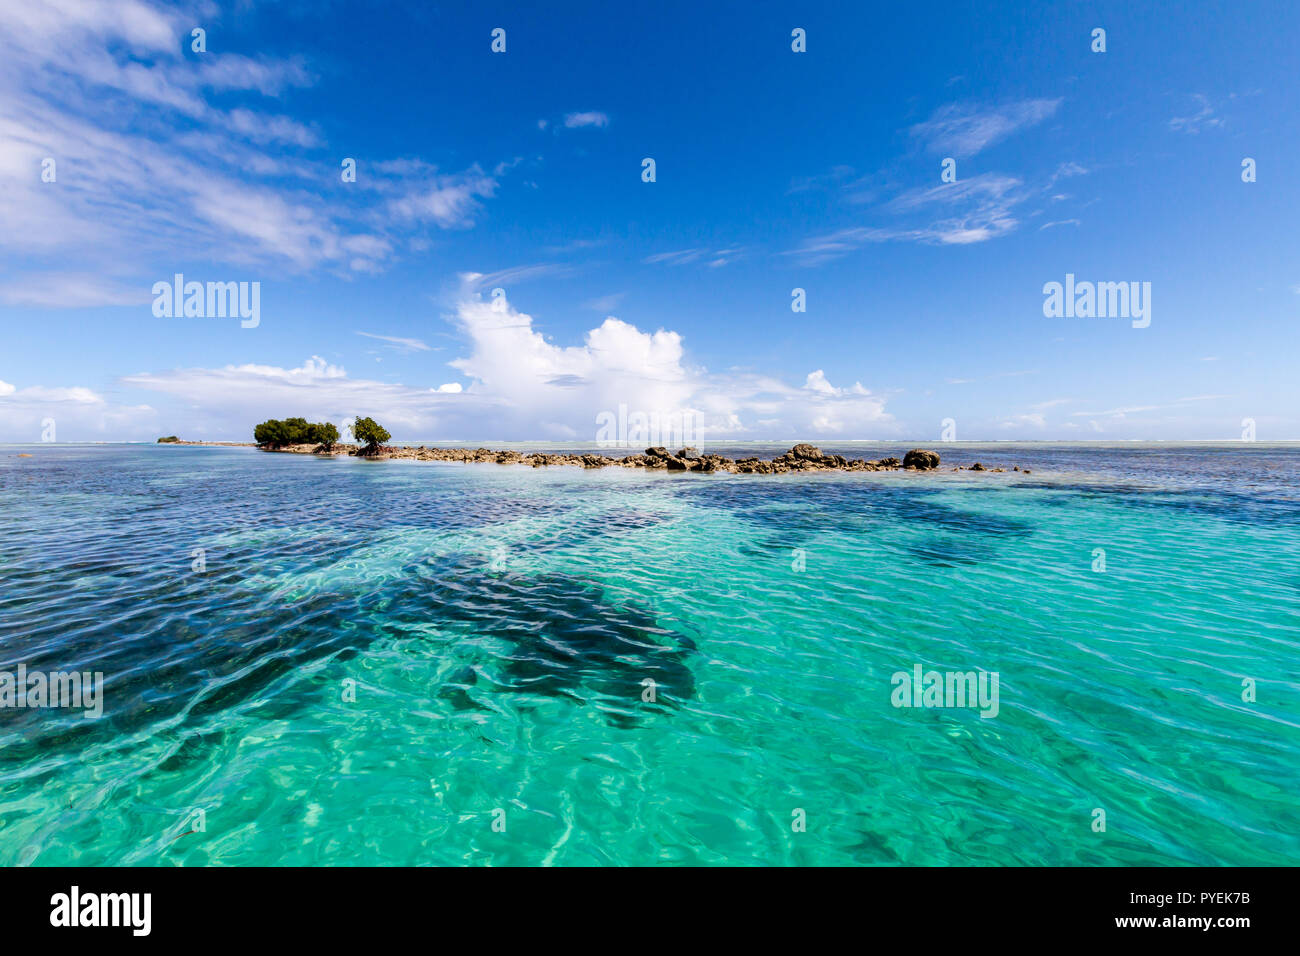 Azure turquoise blue lagoon, corals, small uninhabited reef island motu, dangerous rocks, some mangroves trees, Pohnpei island, Micronesia,  Oceania Stock Photo